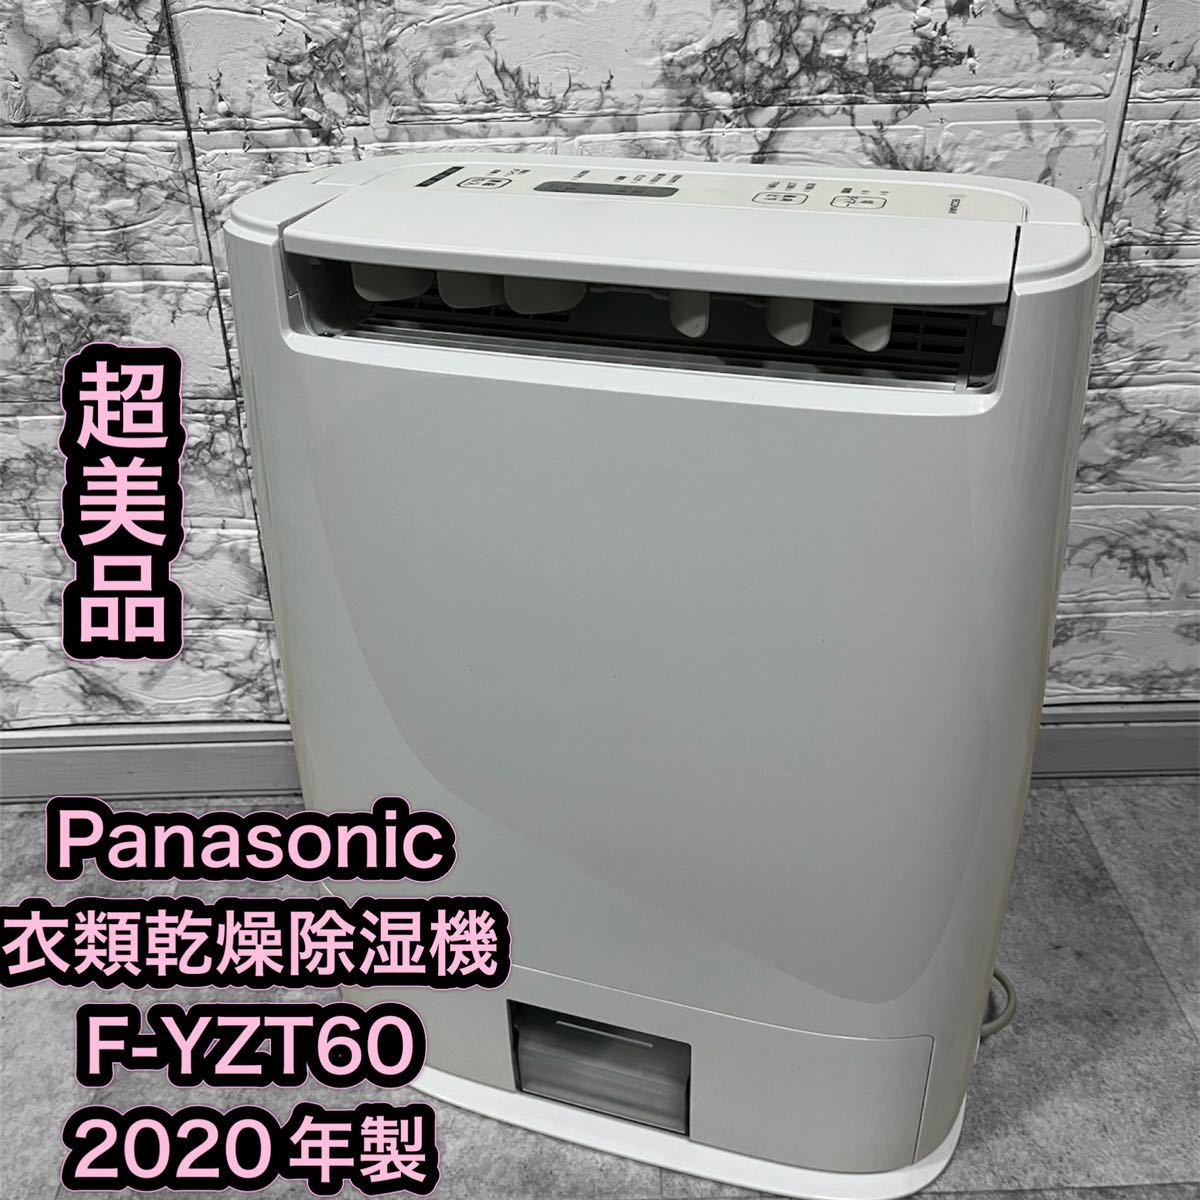 Panasonic 衣類乾燥除湿機 F-YZT60 2020年製(除湿器)｜売買されたオークション情報、yahooの商品情報をアーカイブ公開